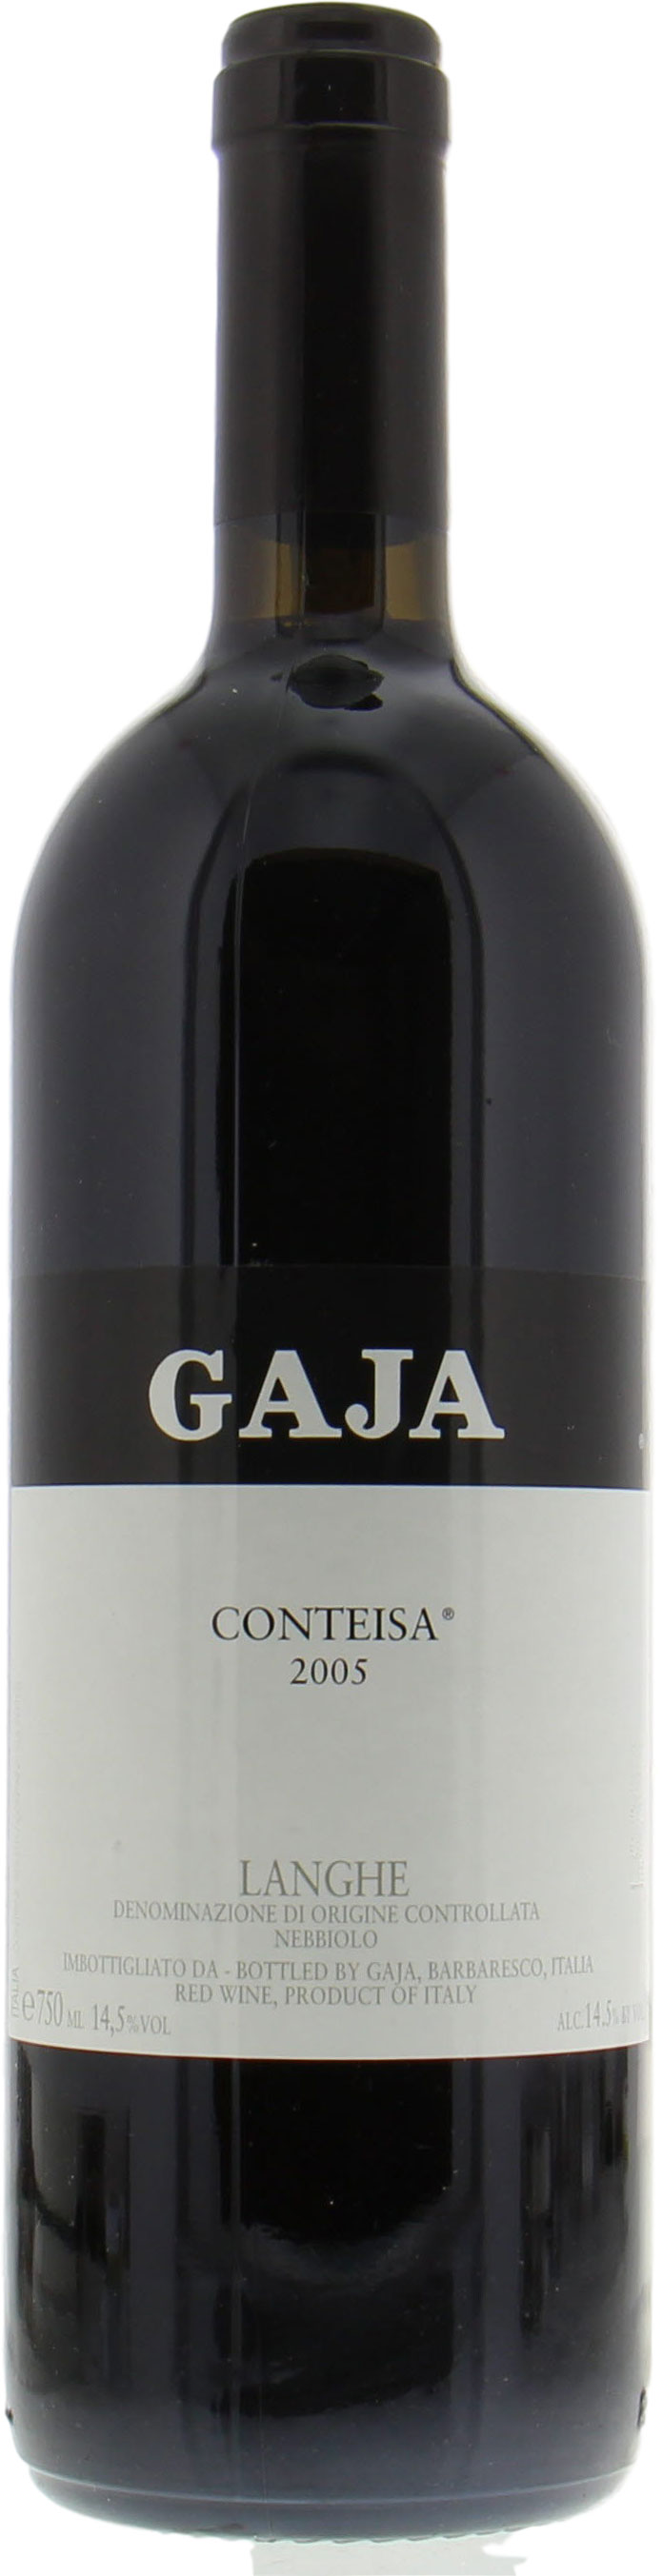 Gaja - Conteisa 2005